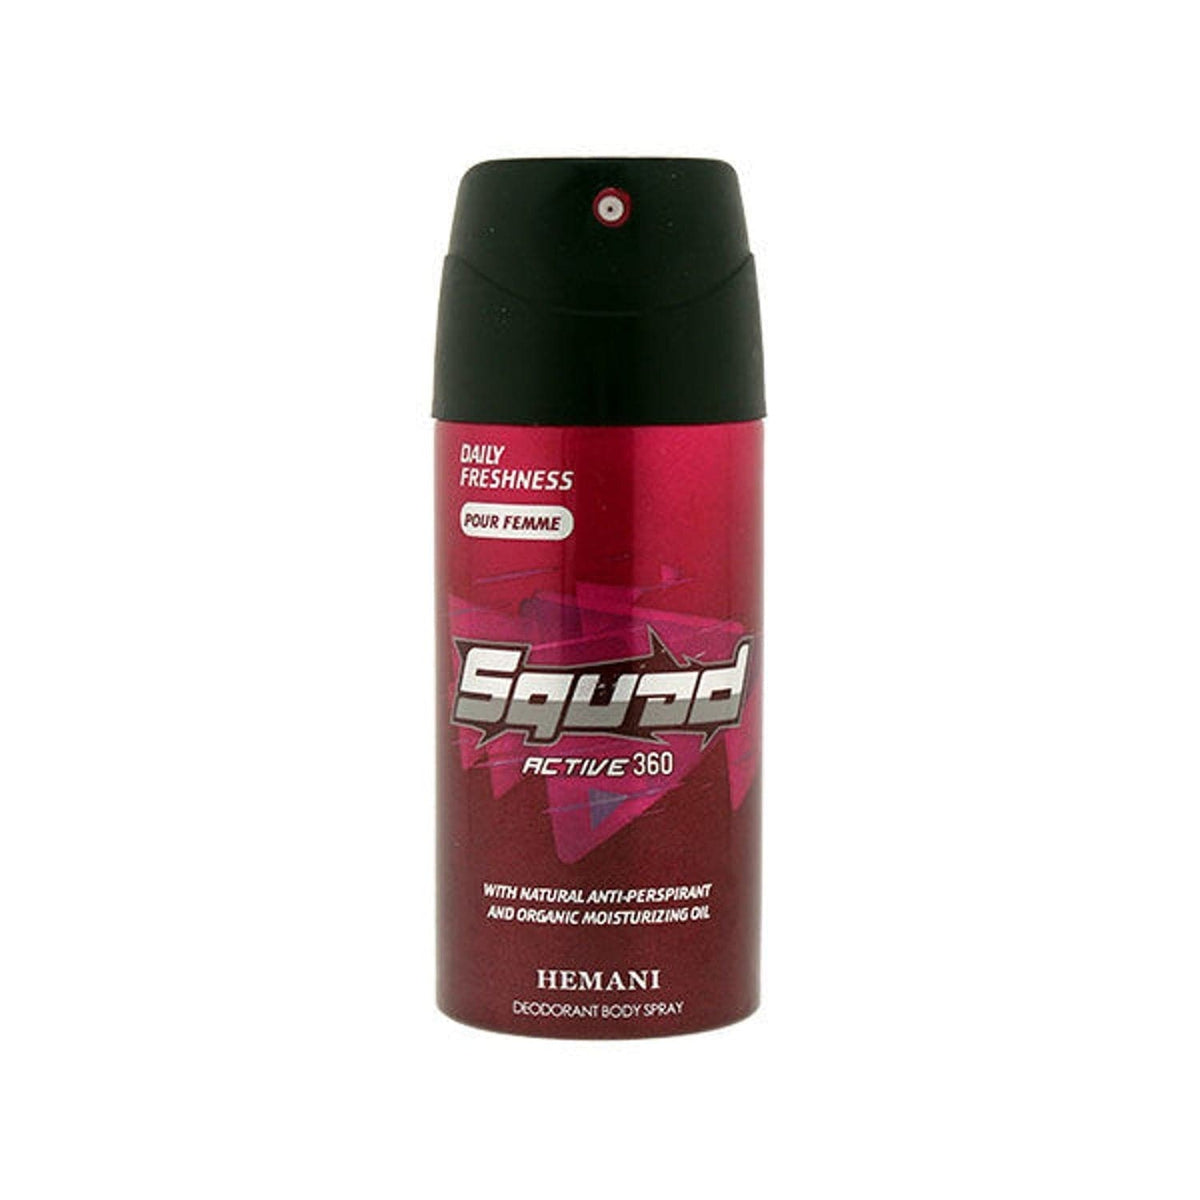 Hemani Squad Deodorant Spray Active 360 For Women - Premium  from Hemani - Just Rs 350.00! Shop now at Cozmetica